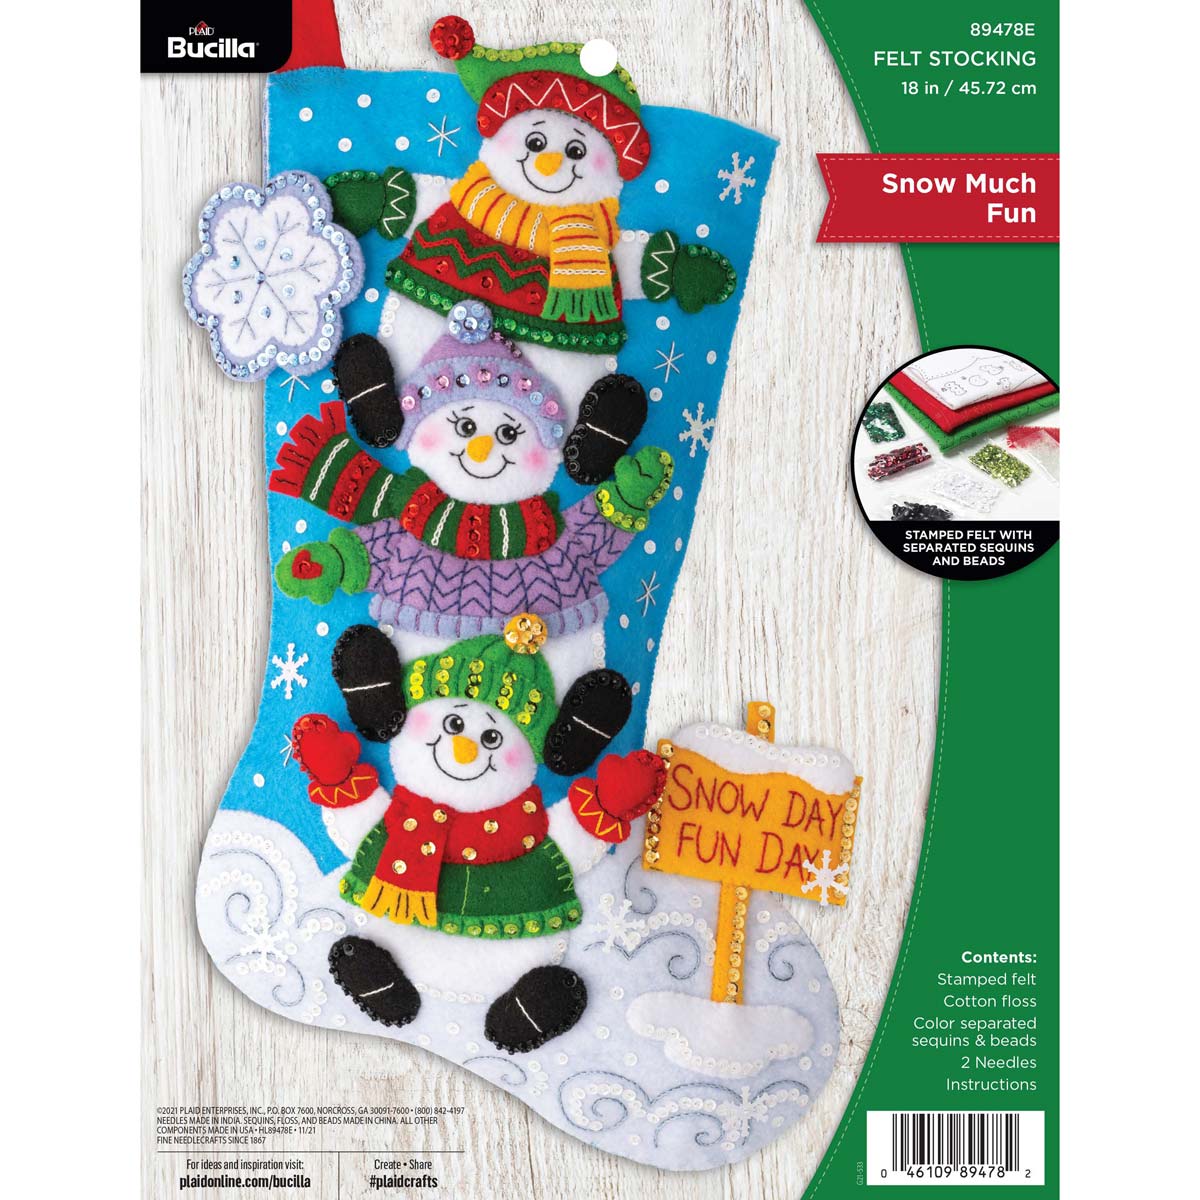 Shop Plaid Bucilla ® Seasonal - Felt - Stocking Kits - Christmas Candy  Express - 86147 - 86147